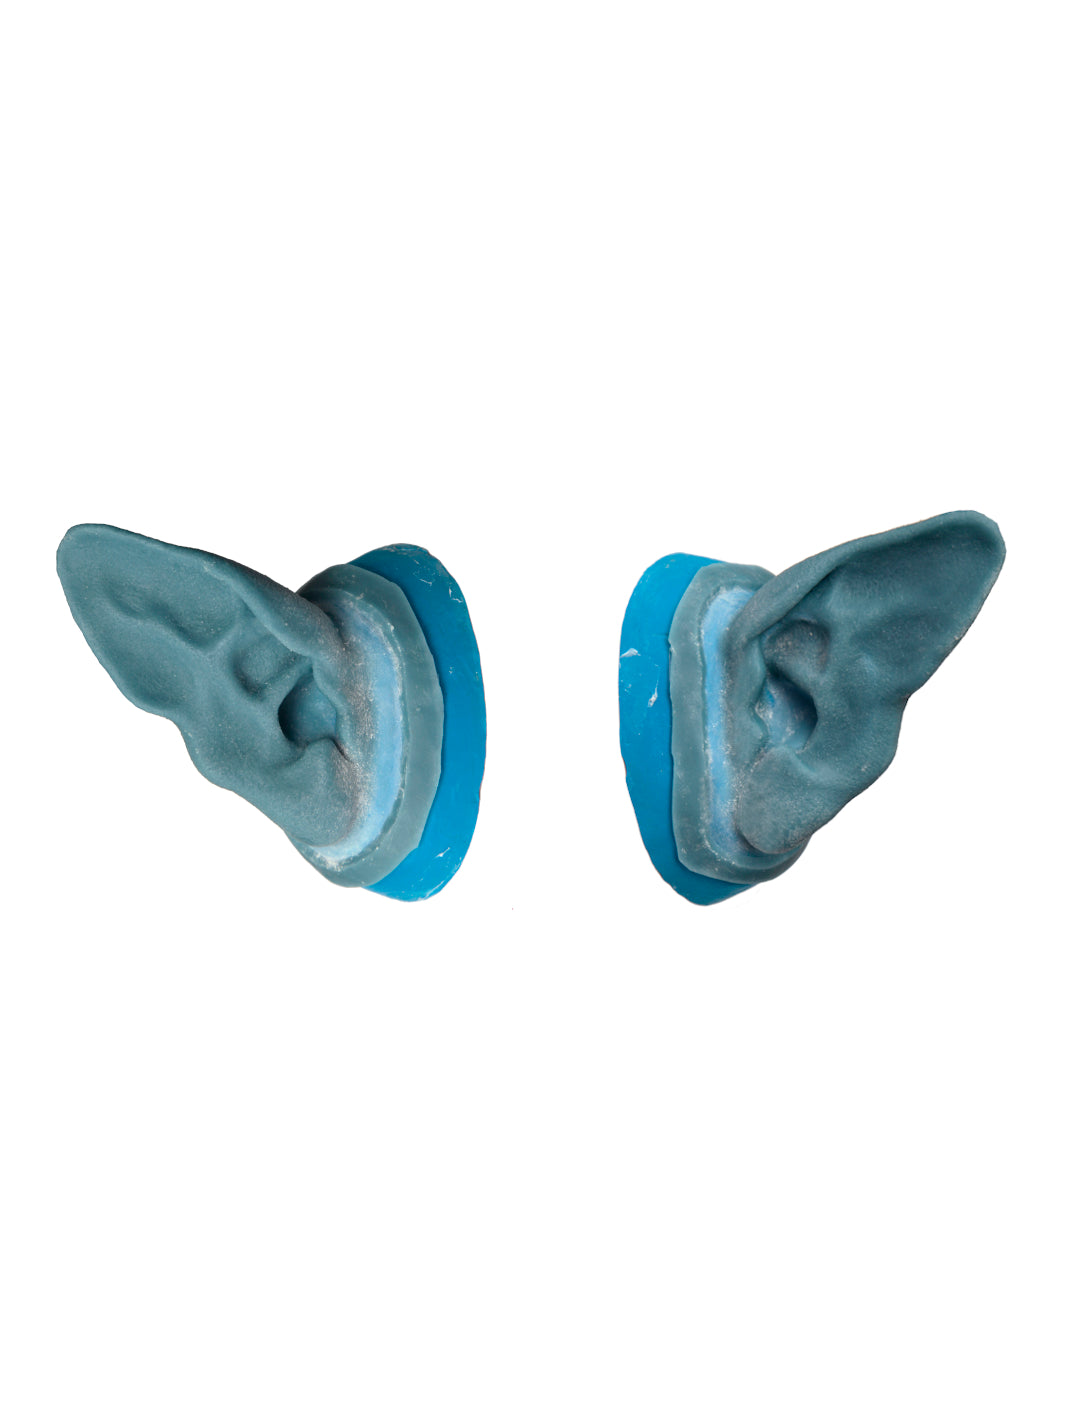 Avatar Ears Silicone Prosthetics